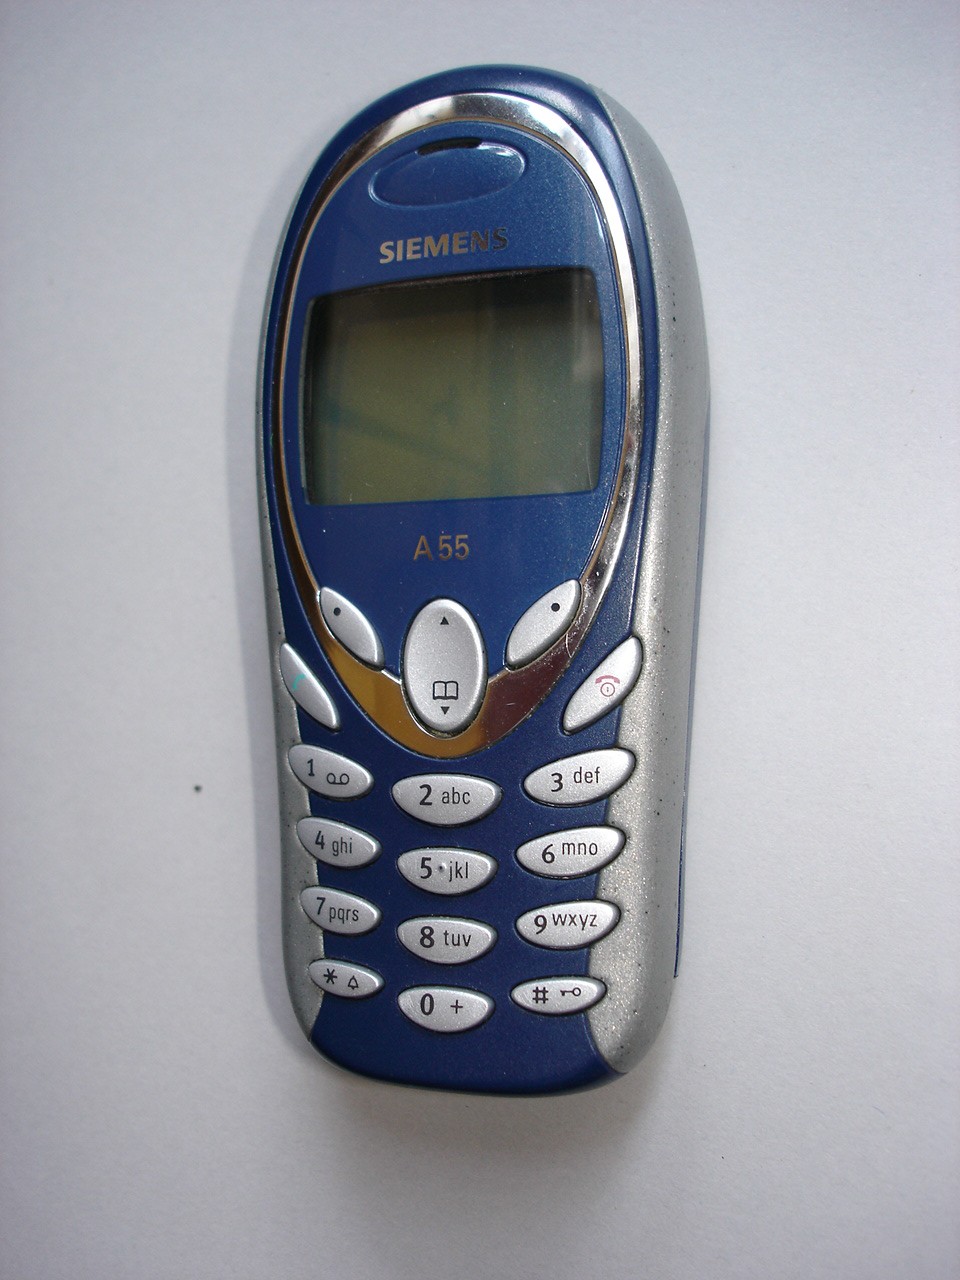 Siemens A55 mobiltelefon (Postamúzeum CC BY-NC-SA)